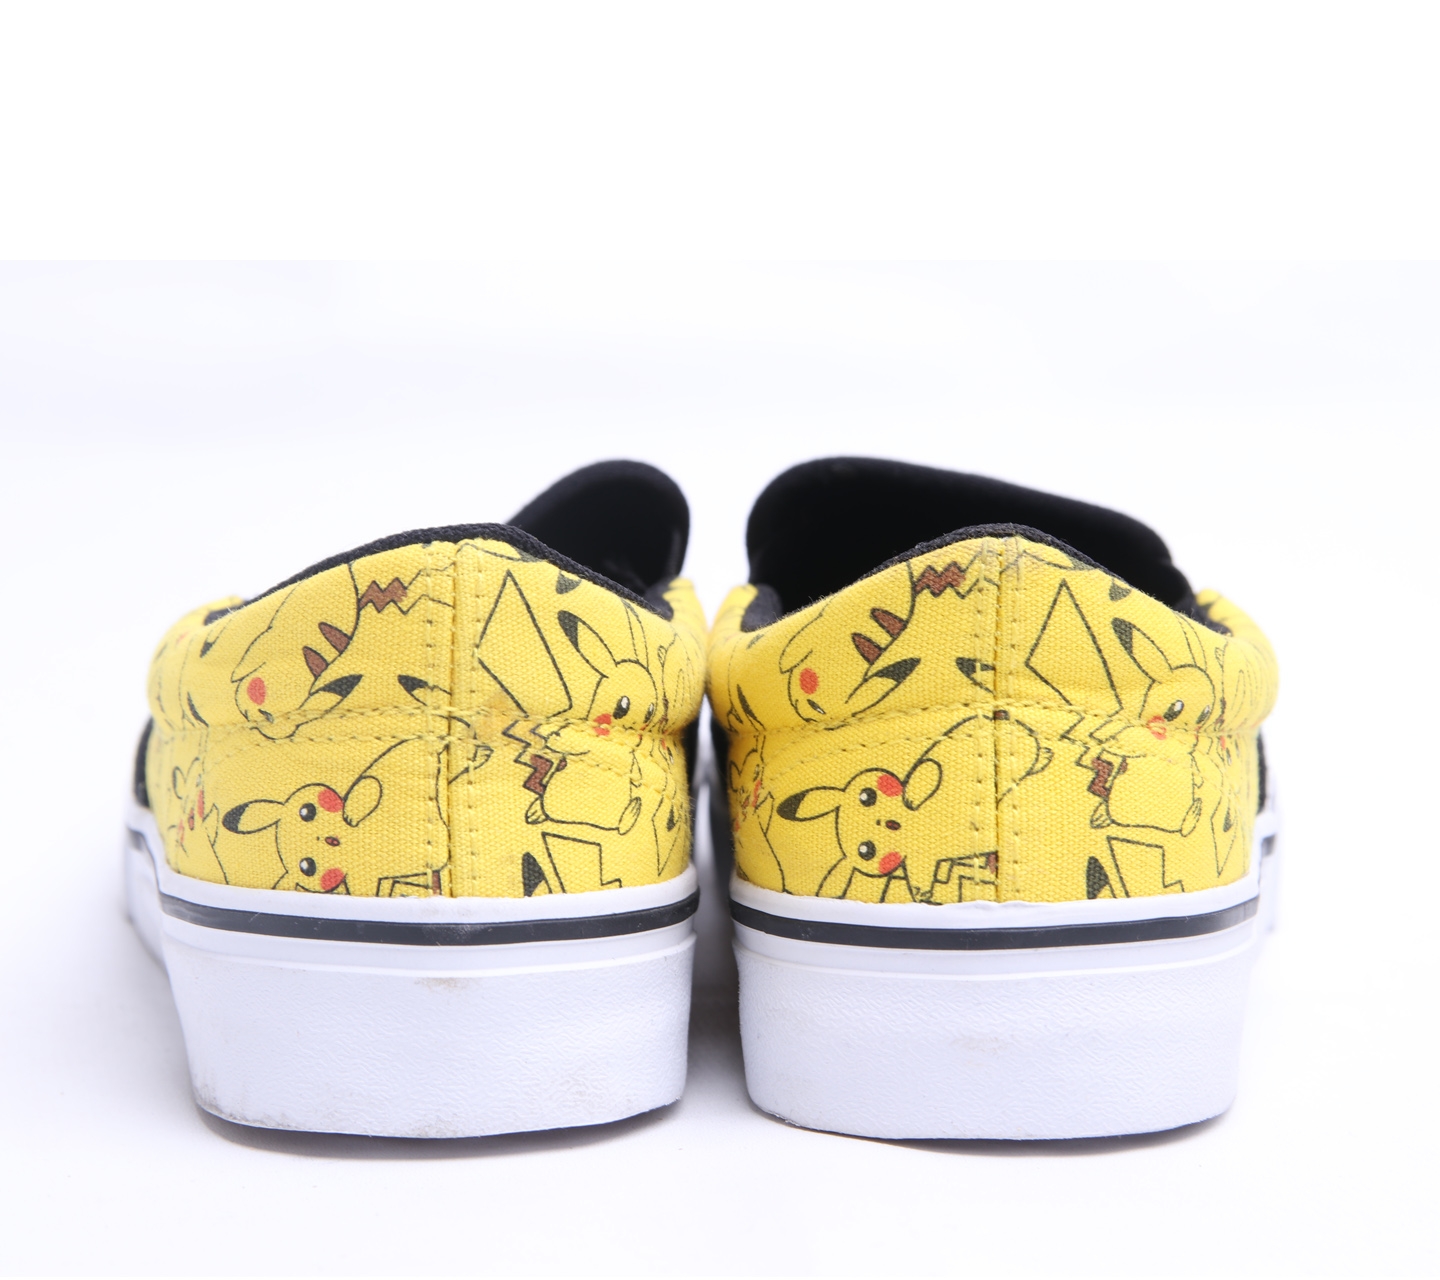 Pokemon Yellow Slip On Sneakers